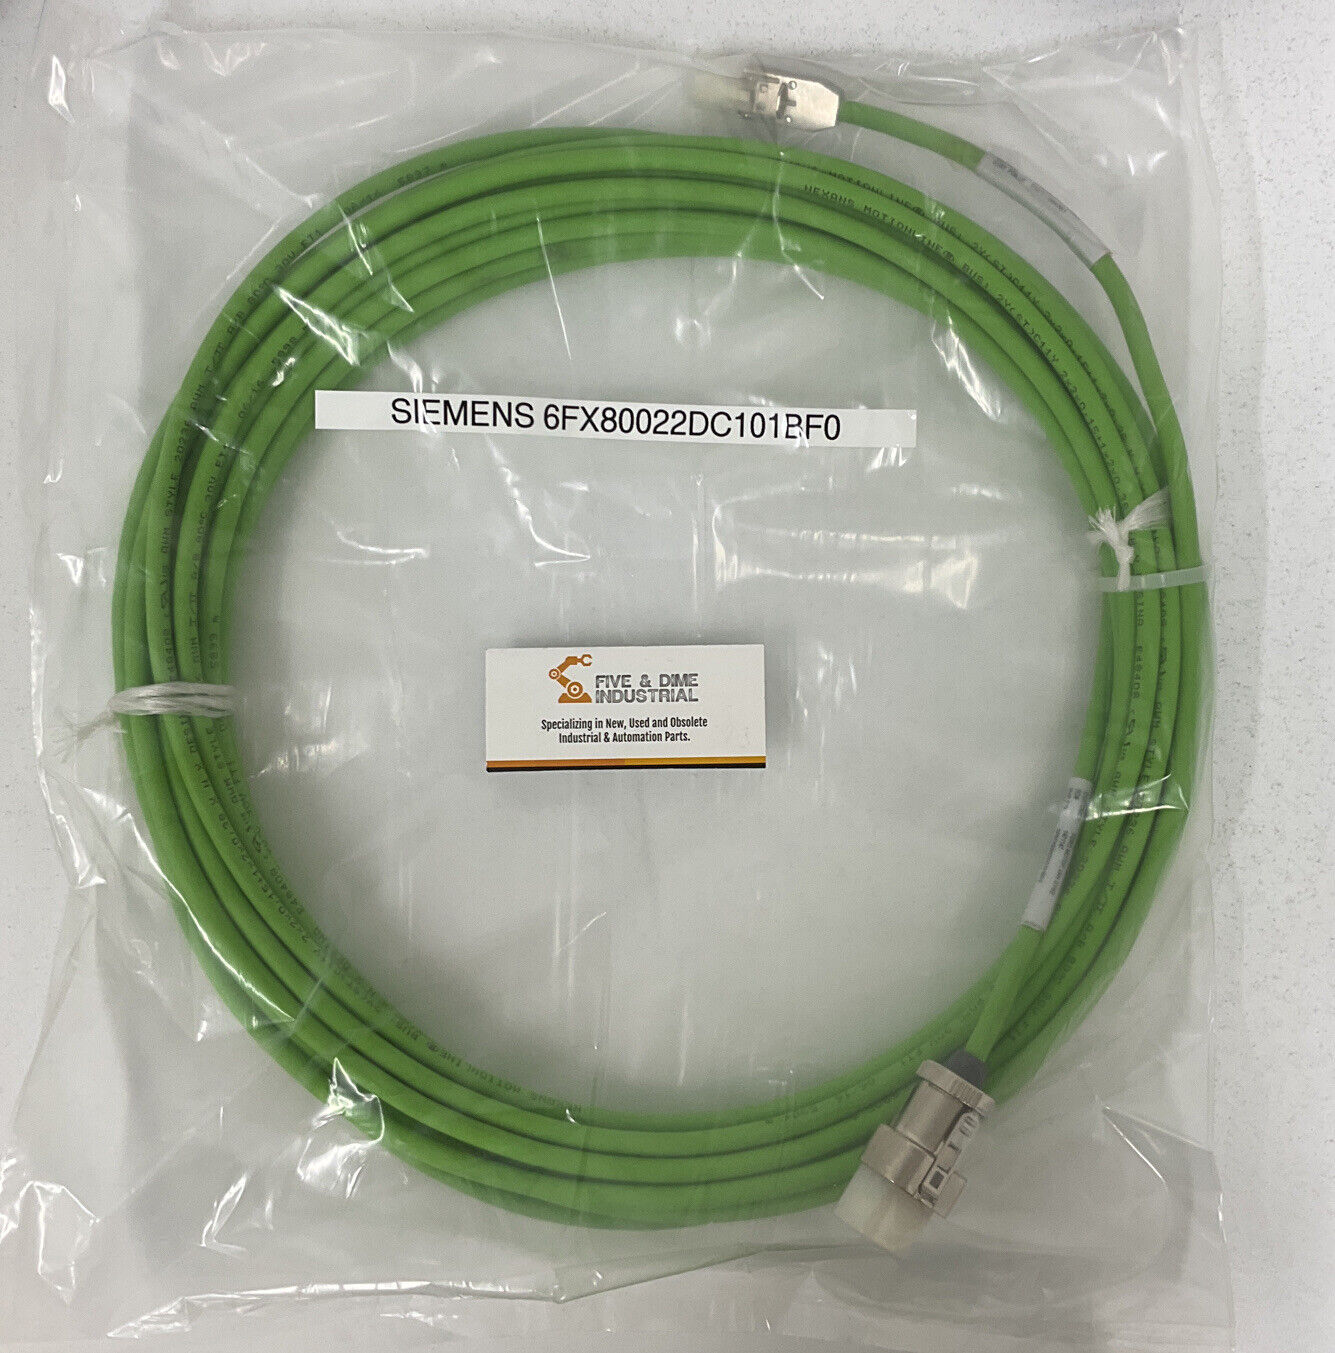 Siemens 6FX80022DC101BF0 CLIQ Replacement Cable 15M (CBL118)